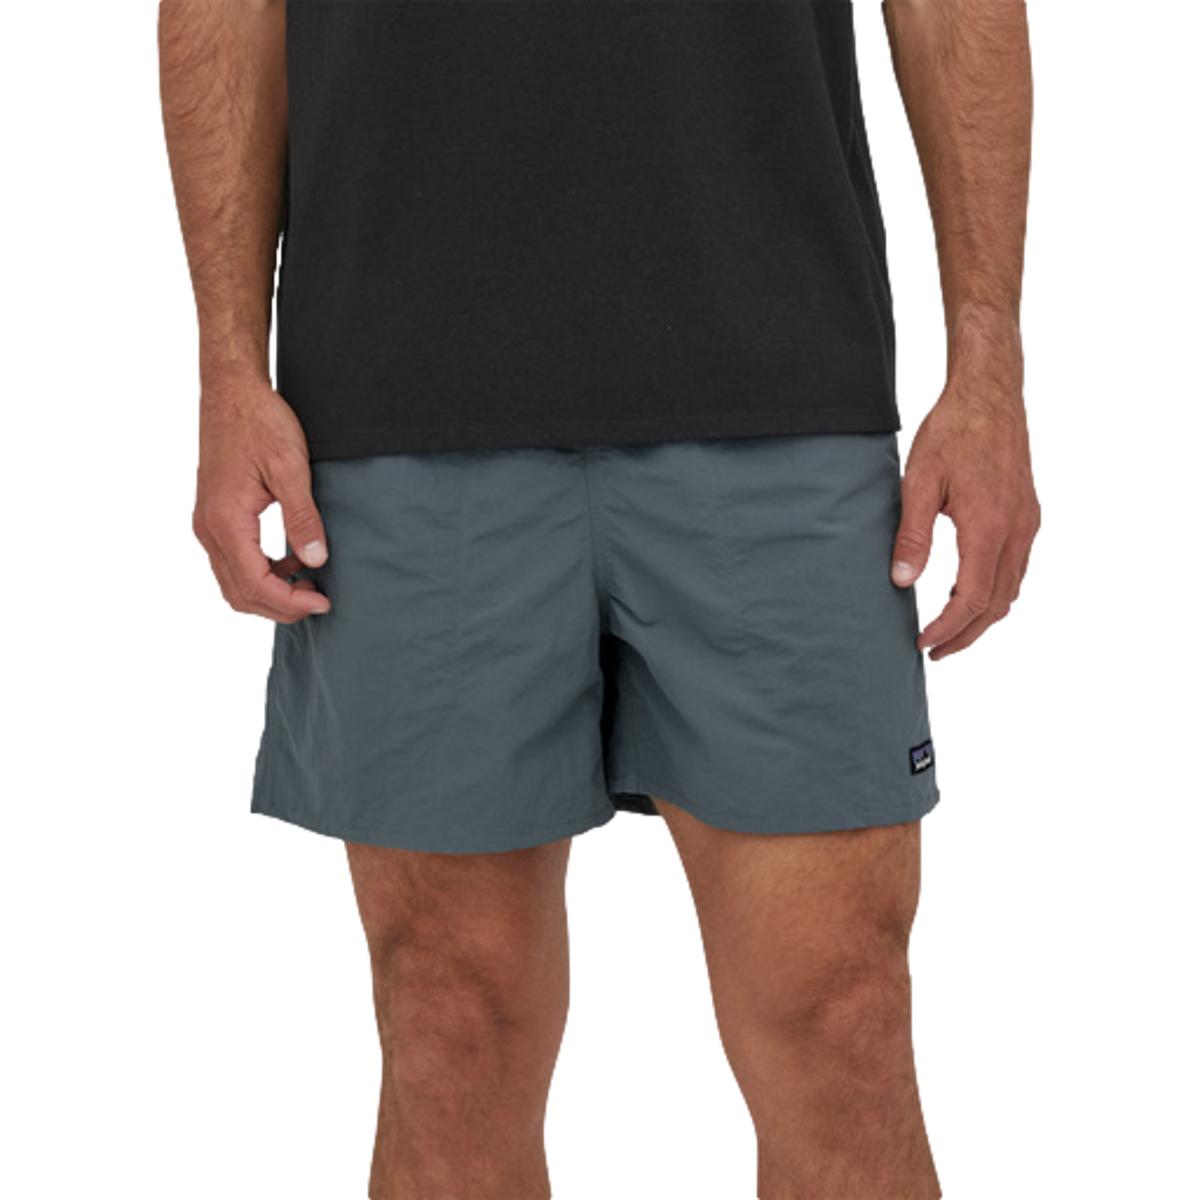 Baggies - 5’ Inseam in Plume Grey - Shorts